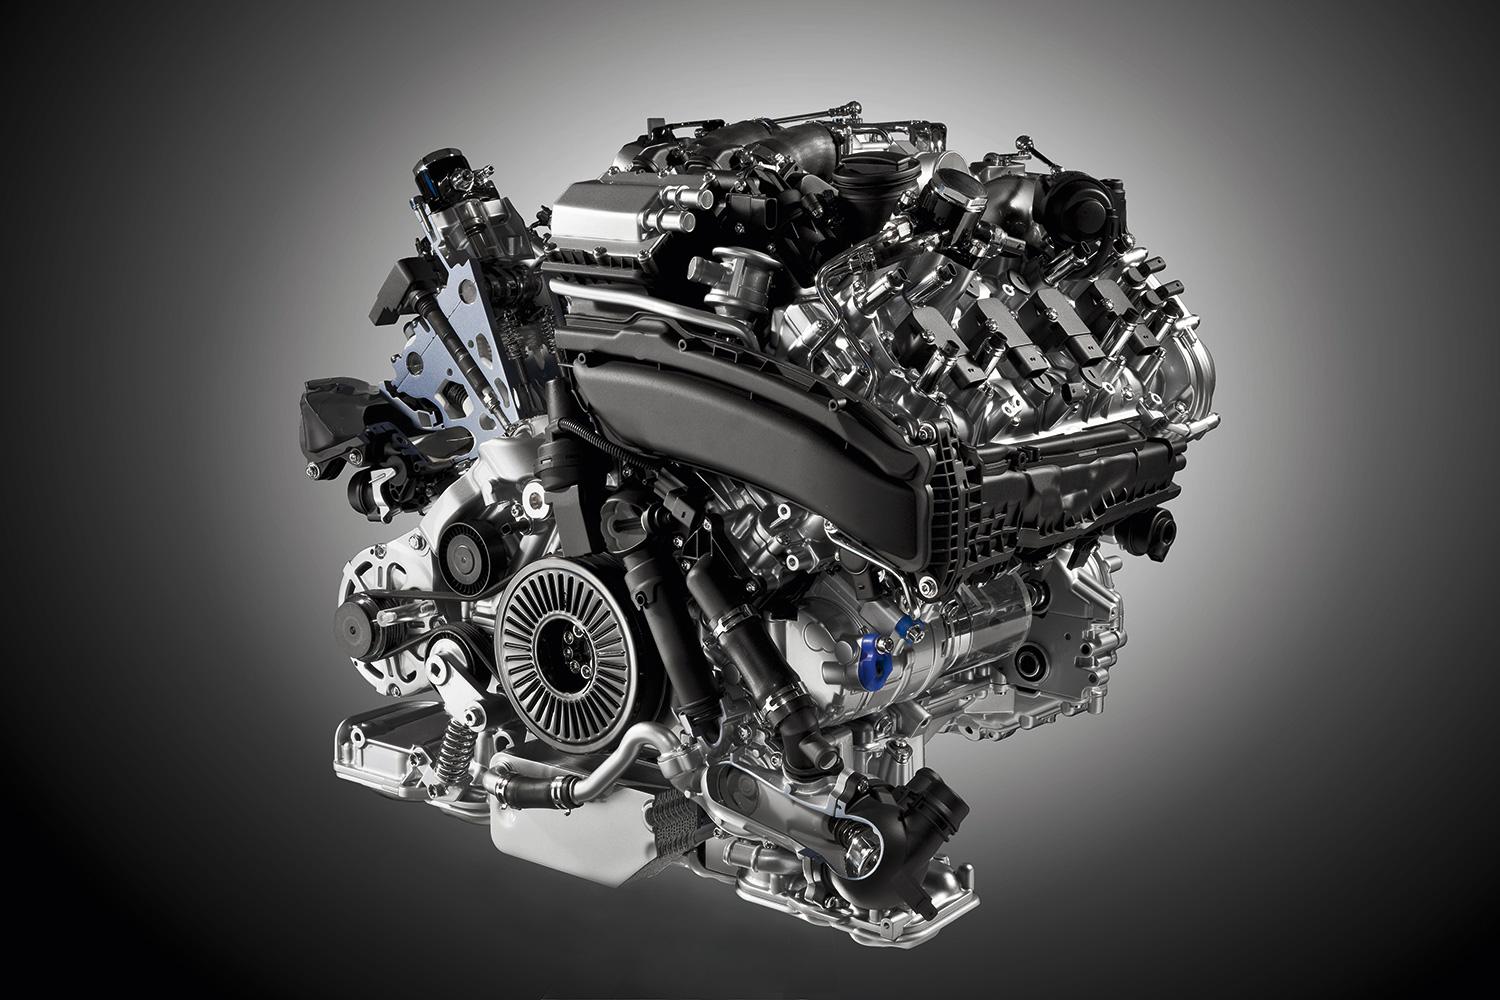 Digital Trends Engine of the Year: Audi's 4.0 TFSI V8 | Digital Trends